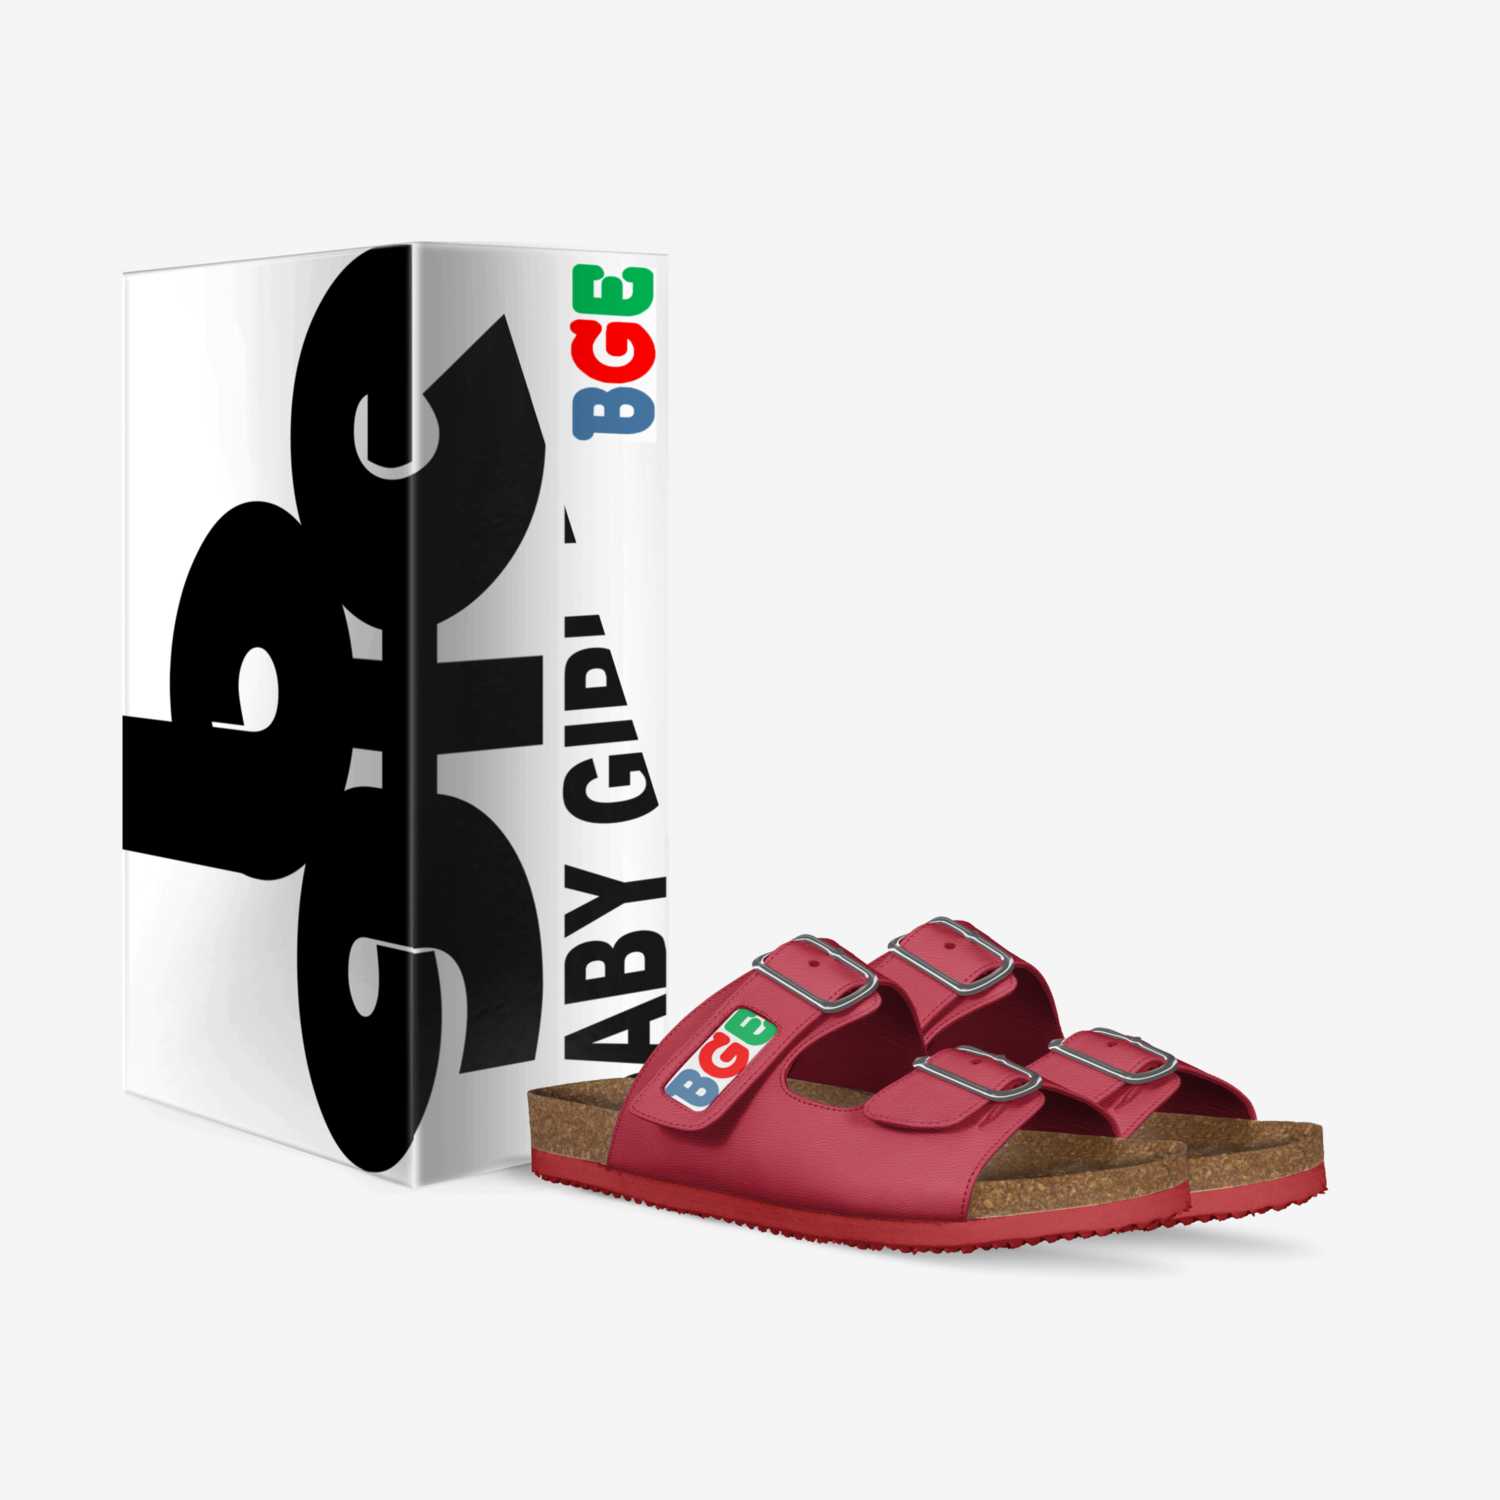 Red Fresco custom made in Italy shoes by Krishan Myrick | Box view